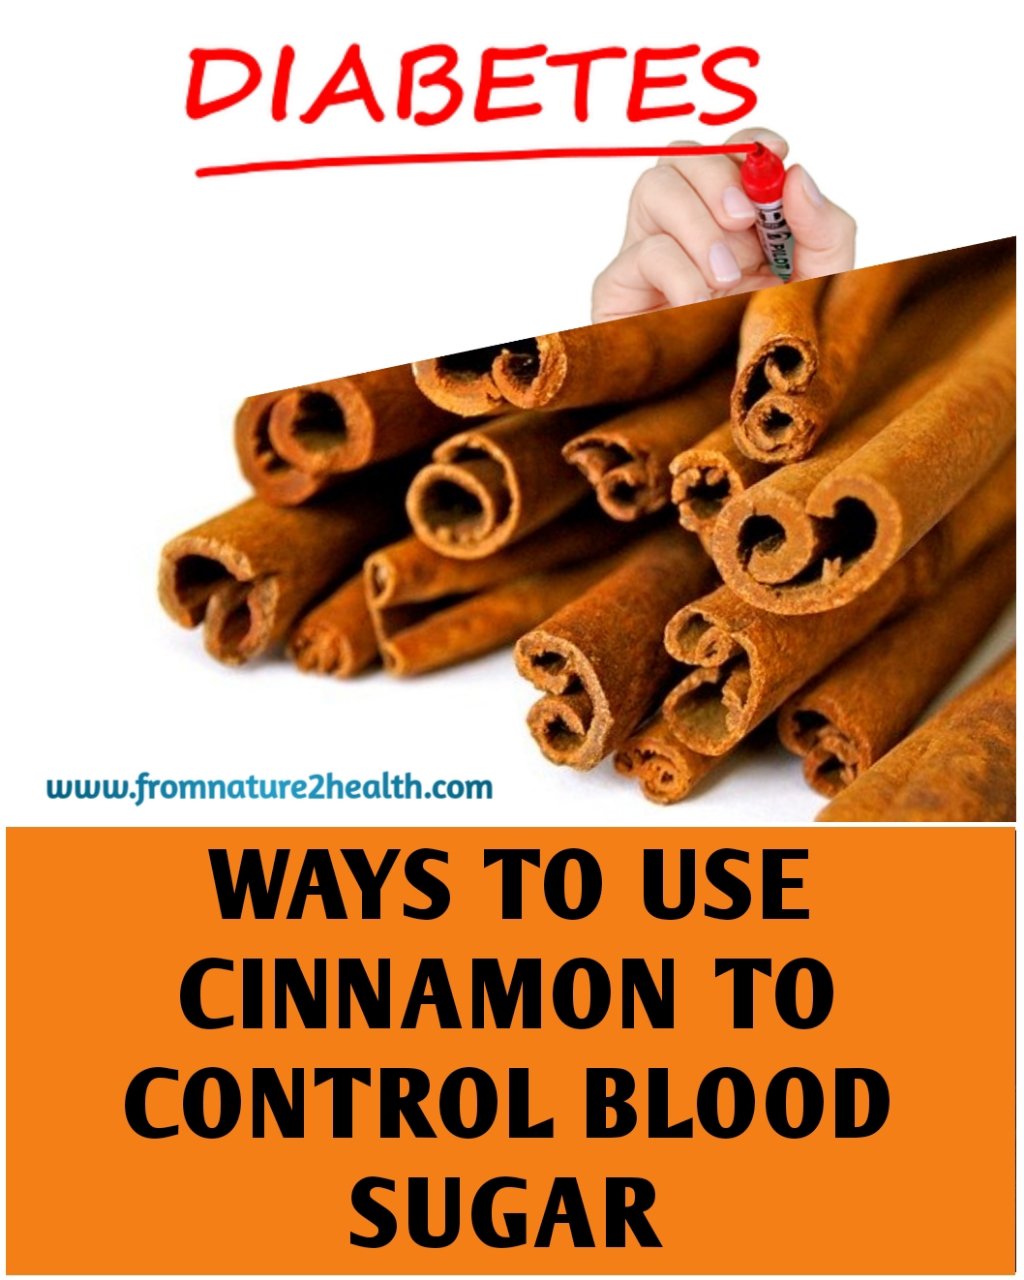 Ways to Use Cinnamon to Control Blood Sugar